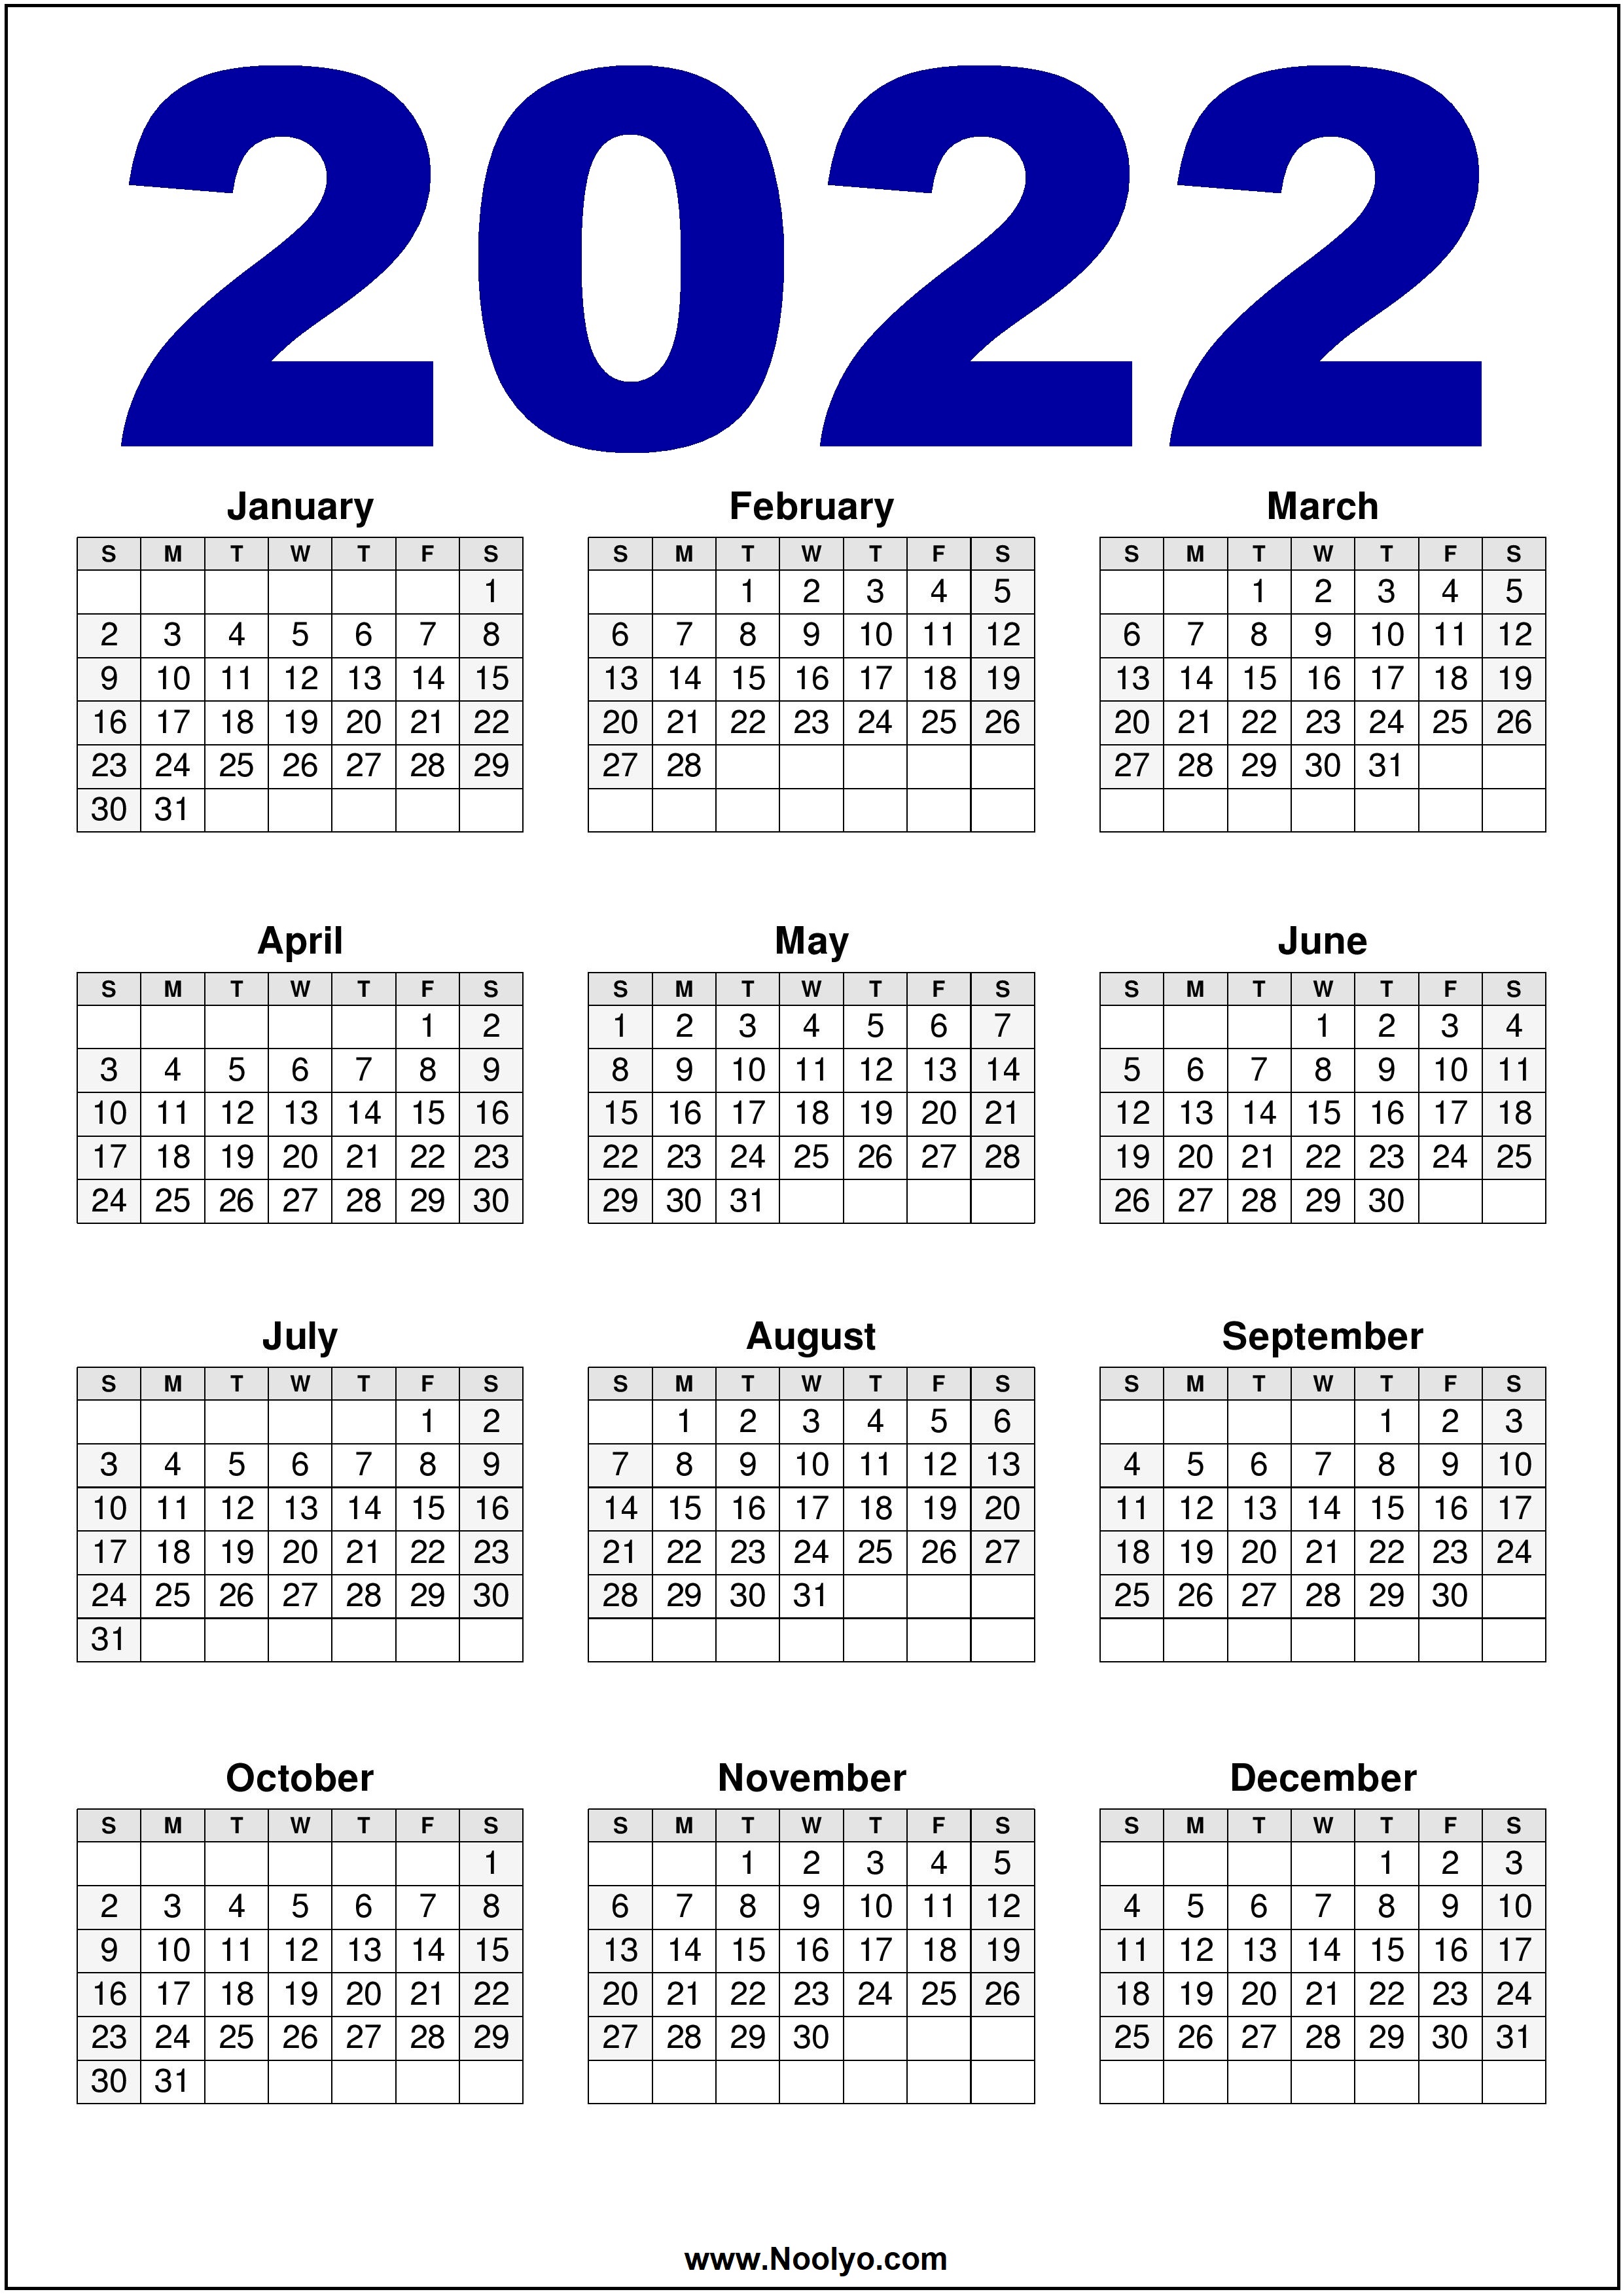 calendar 2022 free download